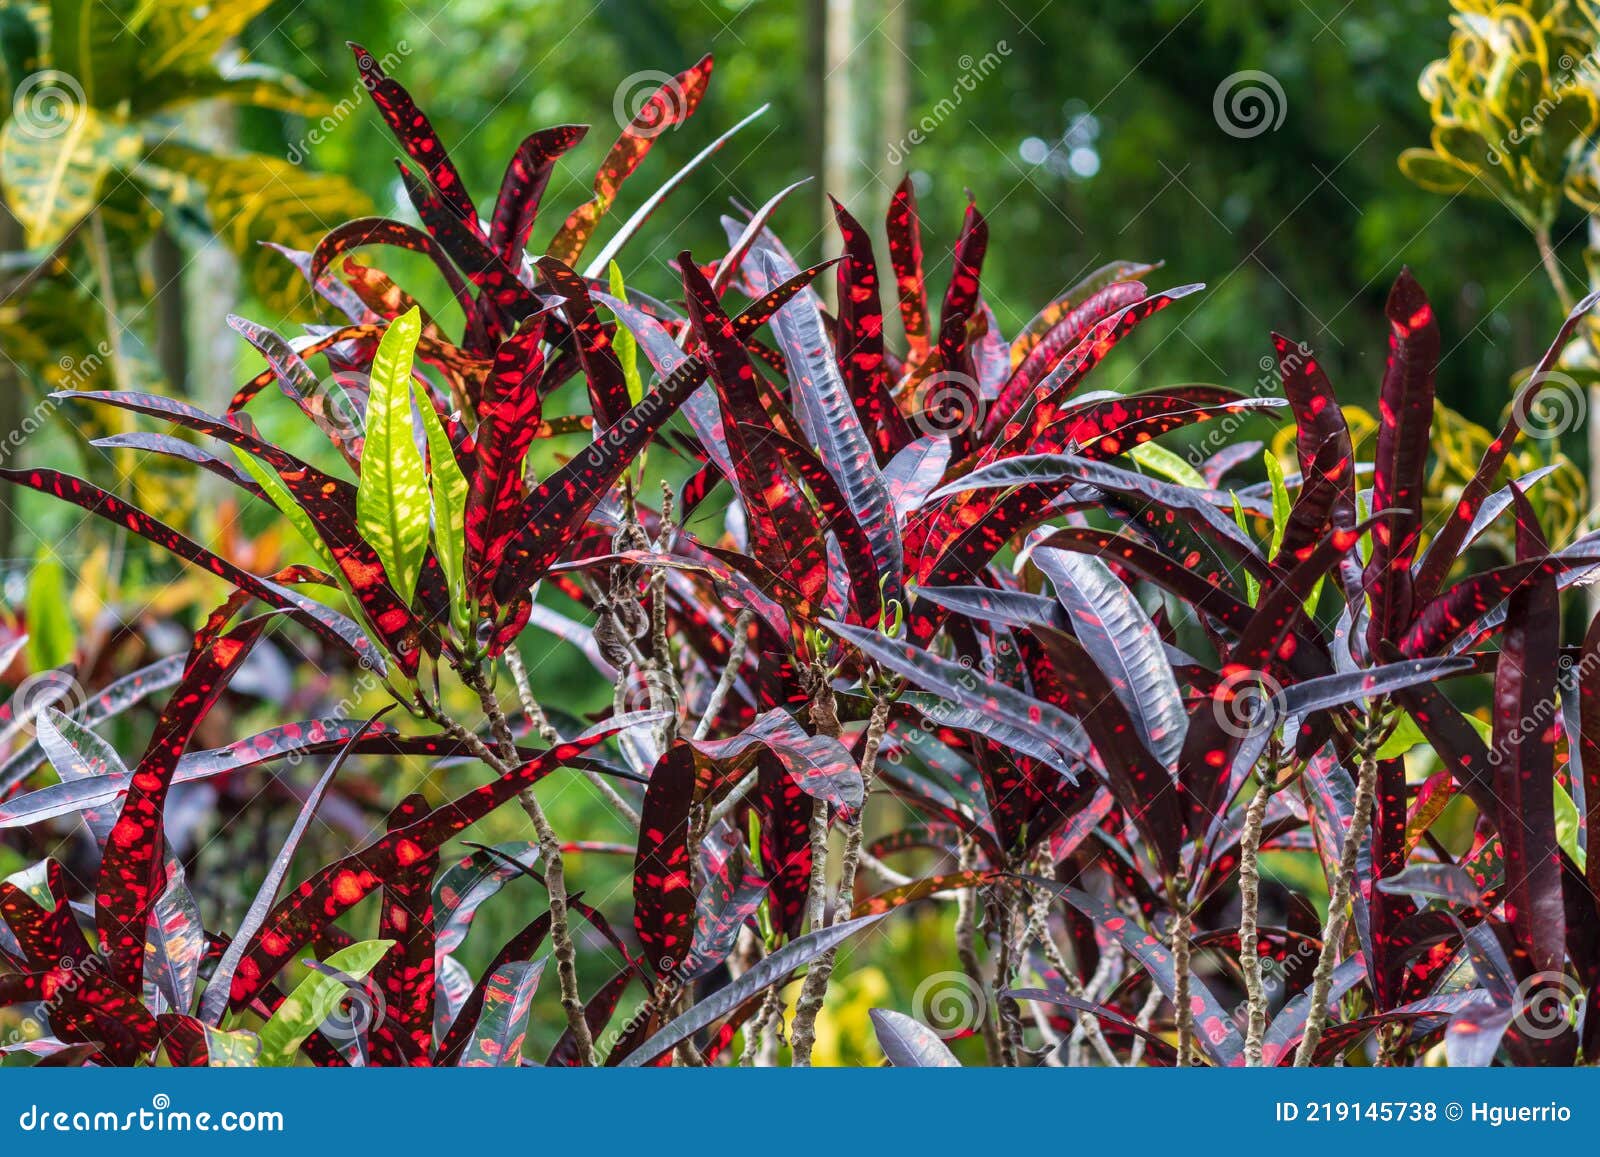 garden croton `franklin roosevelt` cultivar codiaeum variegatum - davie, florida, usa